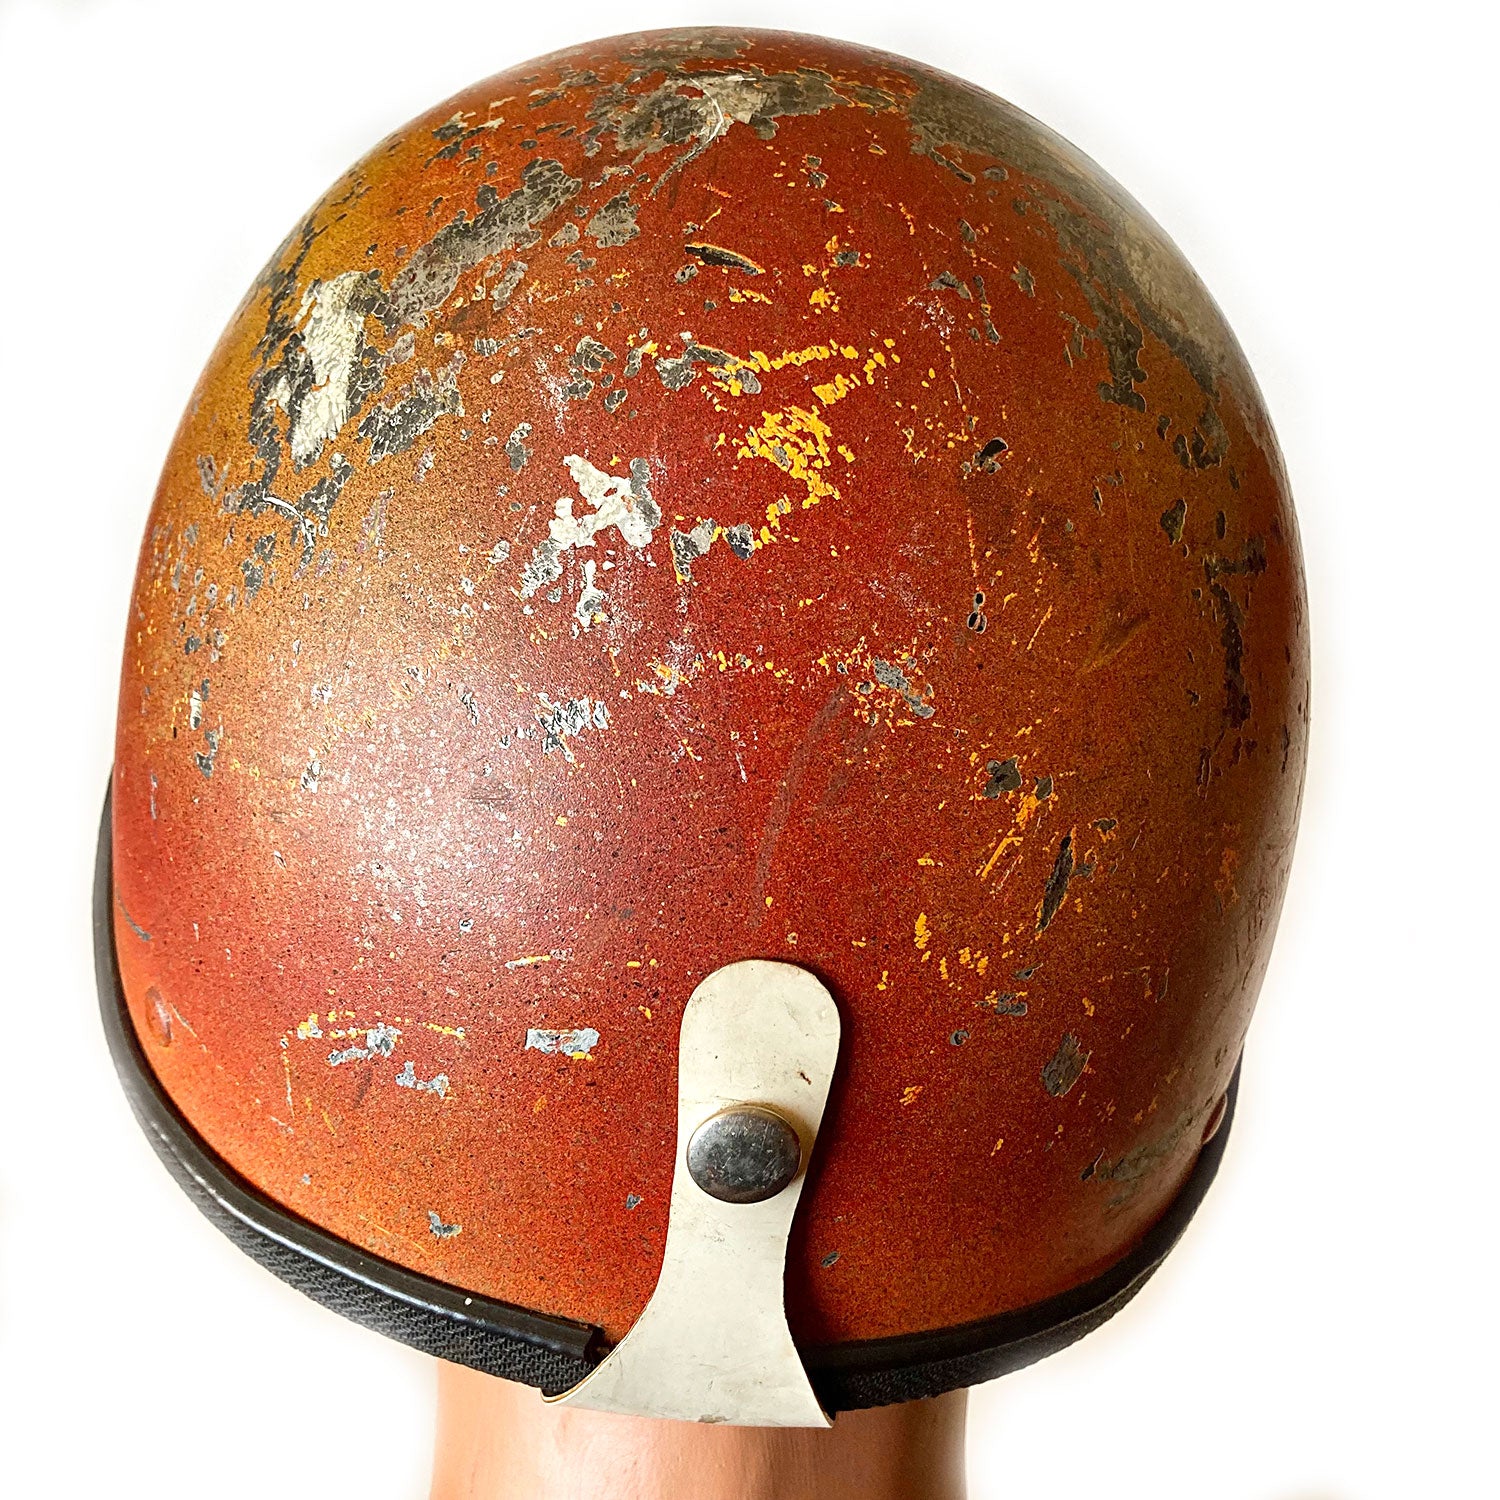 Vintage half-helmet, size L